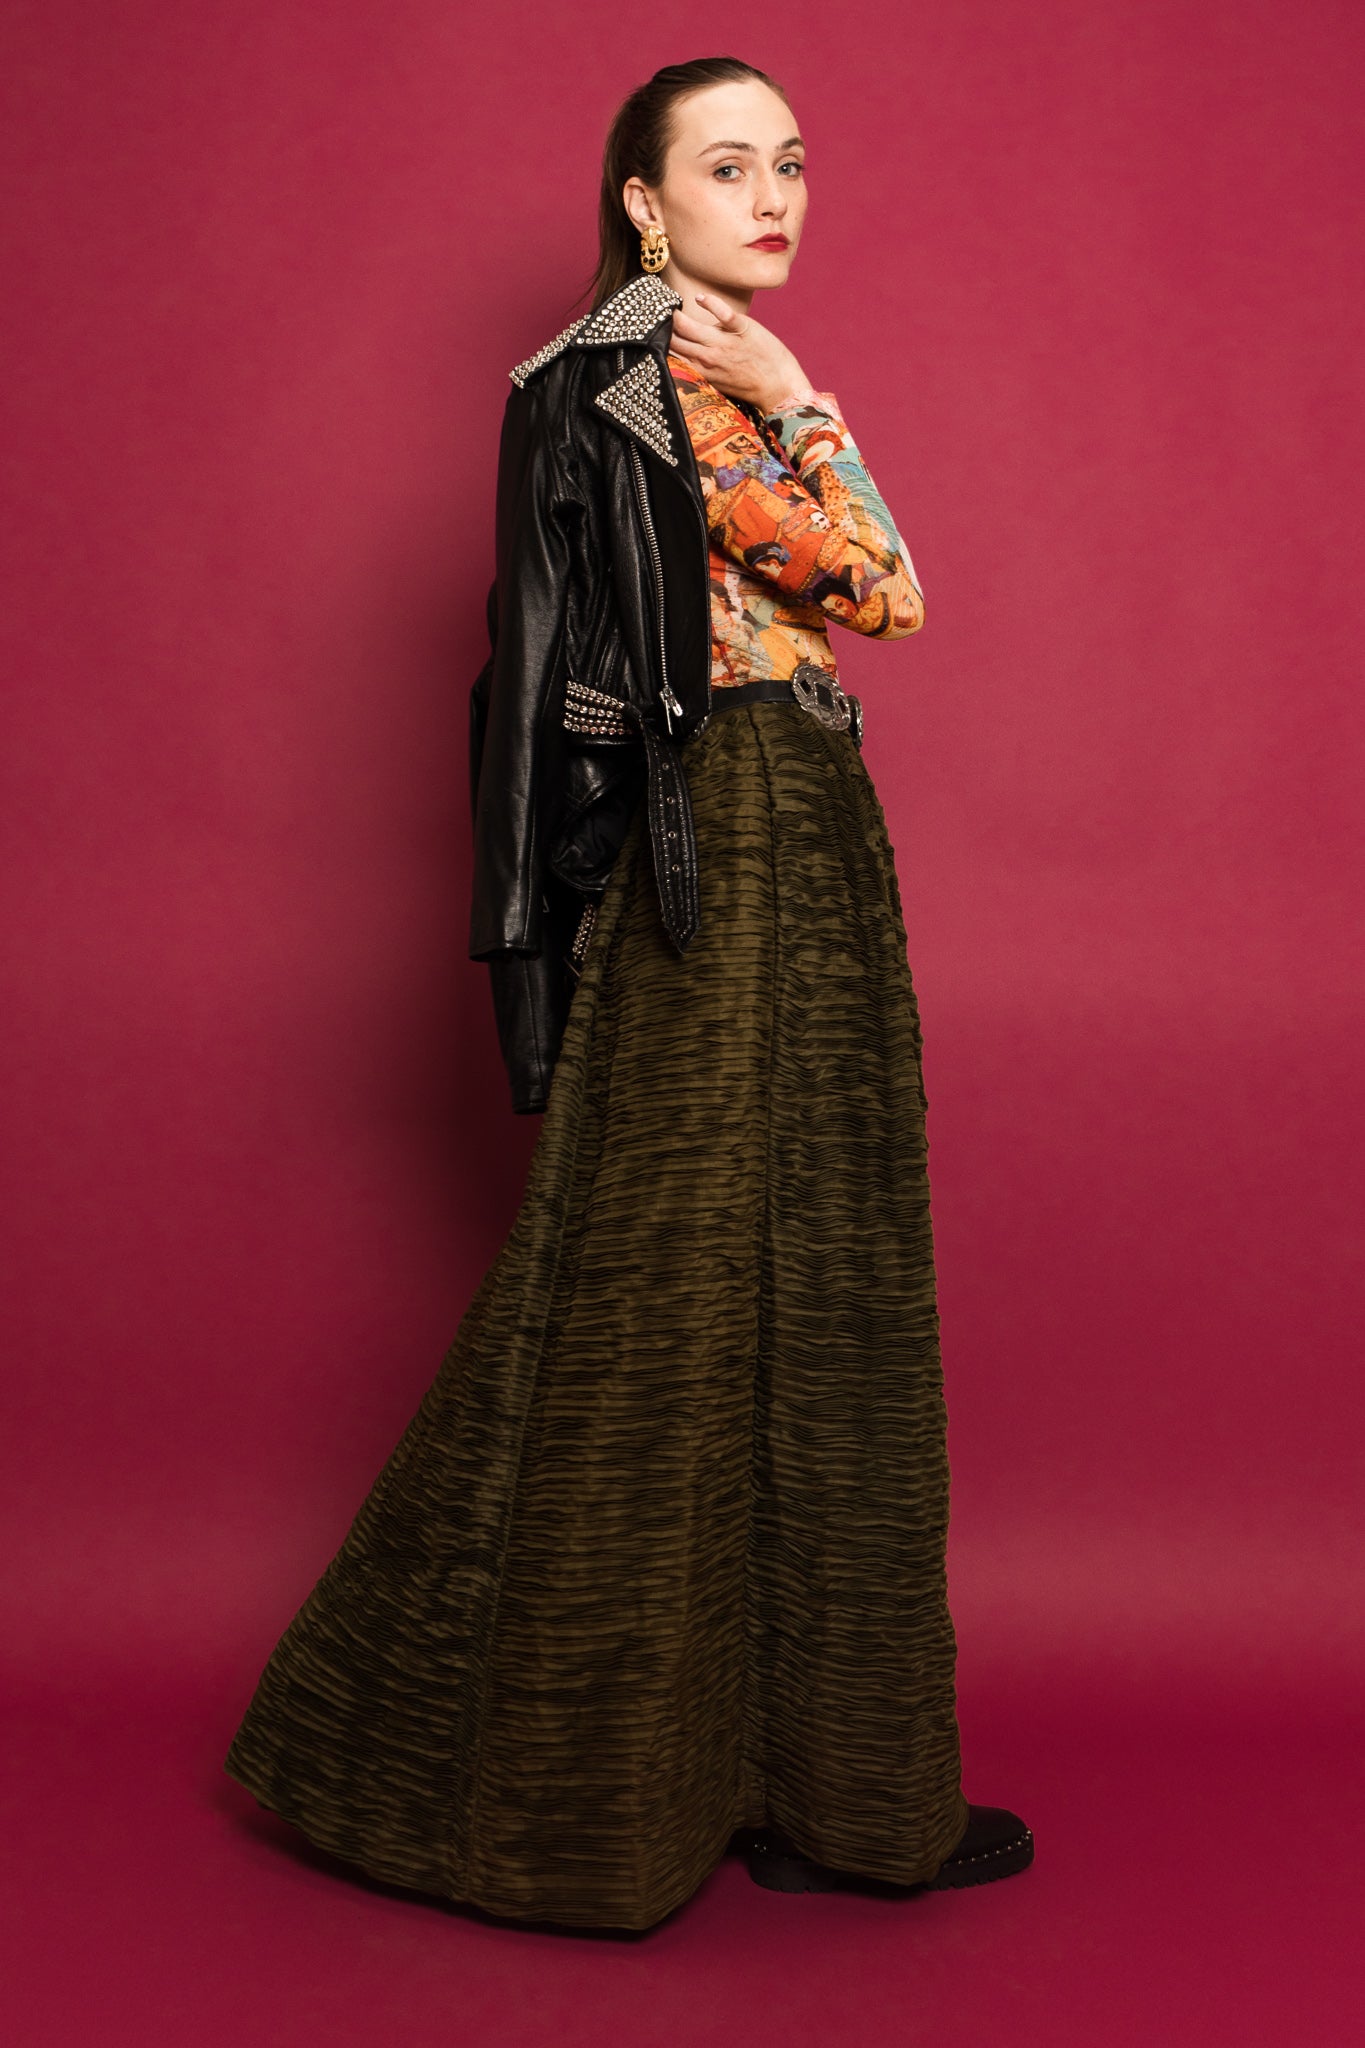 Model Emily in LA Roxx Jacket & Sybil Connolly Skirt @ Recess LA